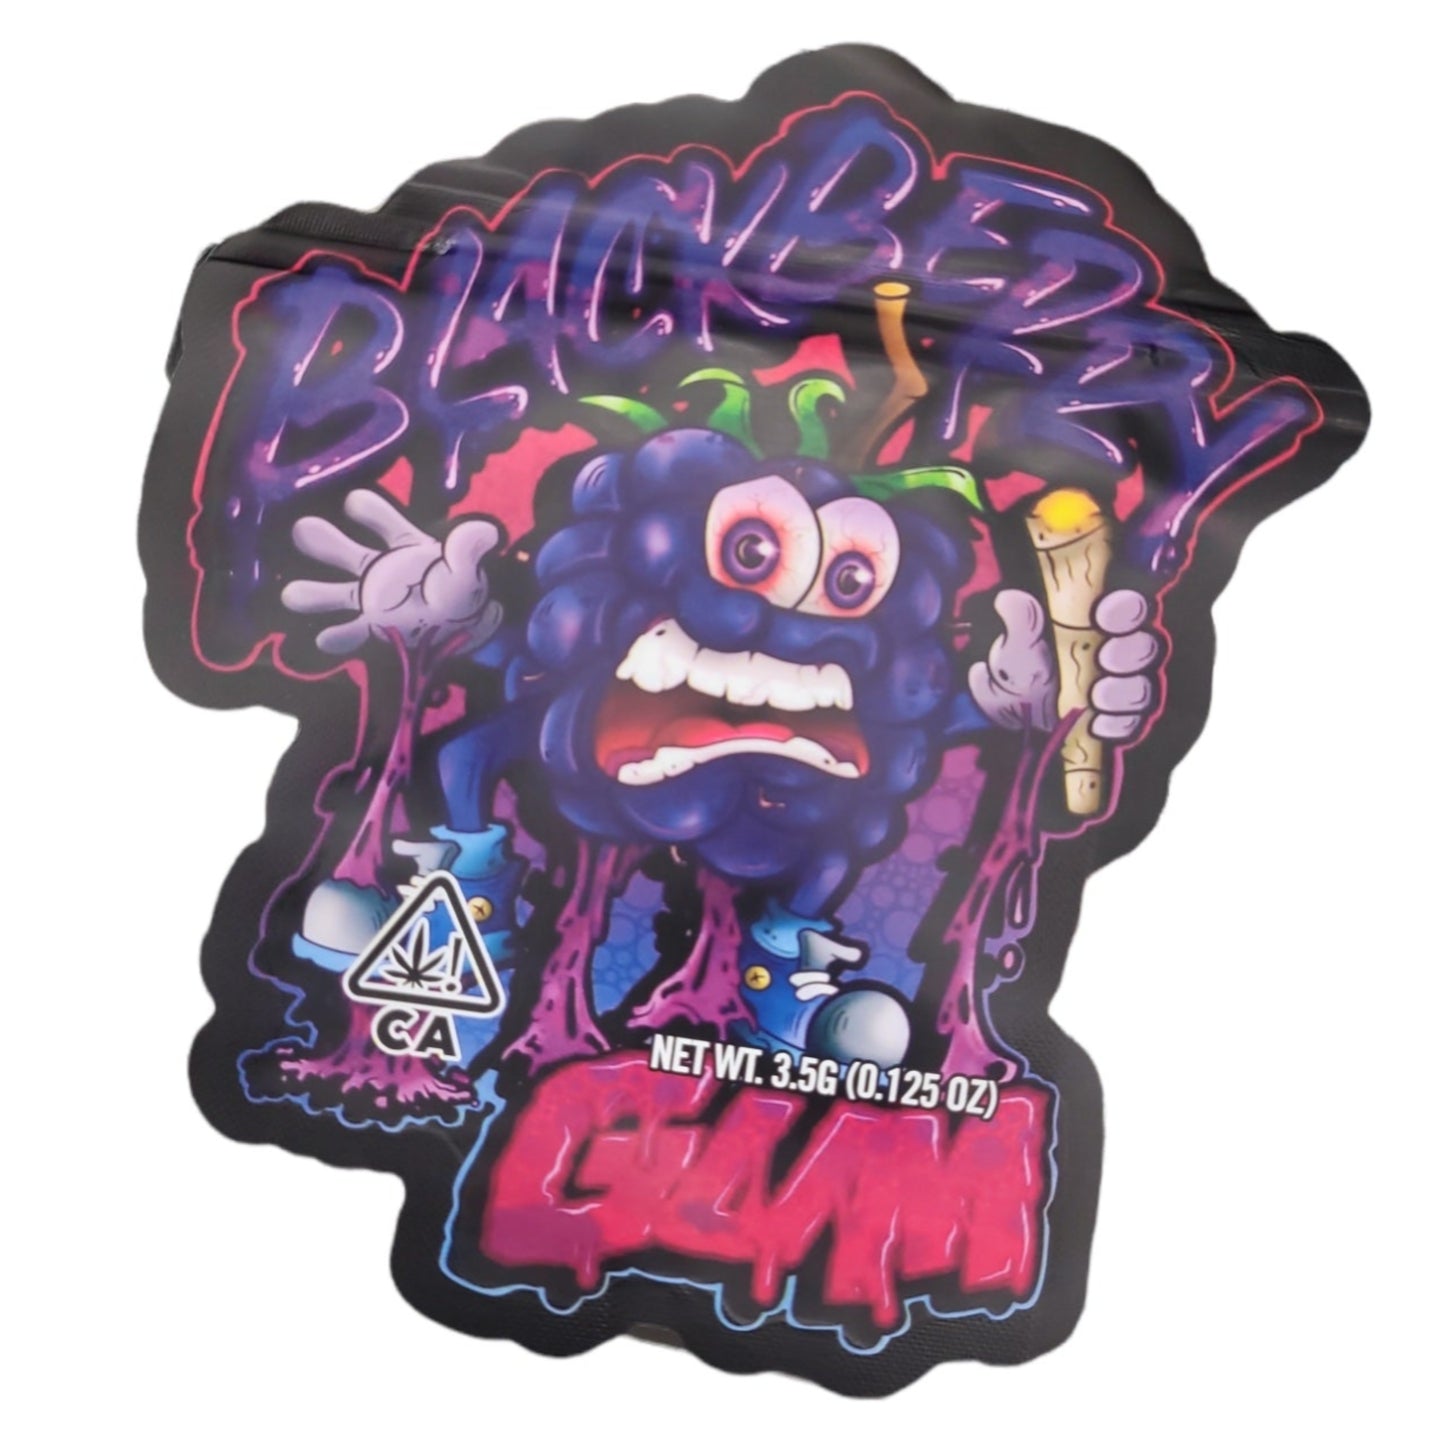 Black Berry Gum 3.5G Mylar Bags